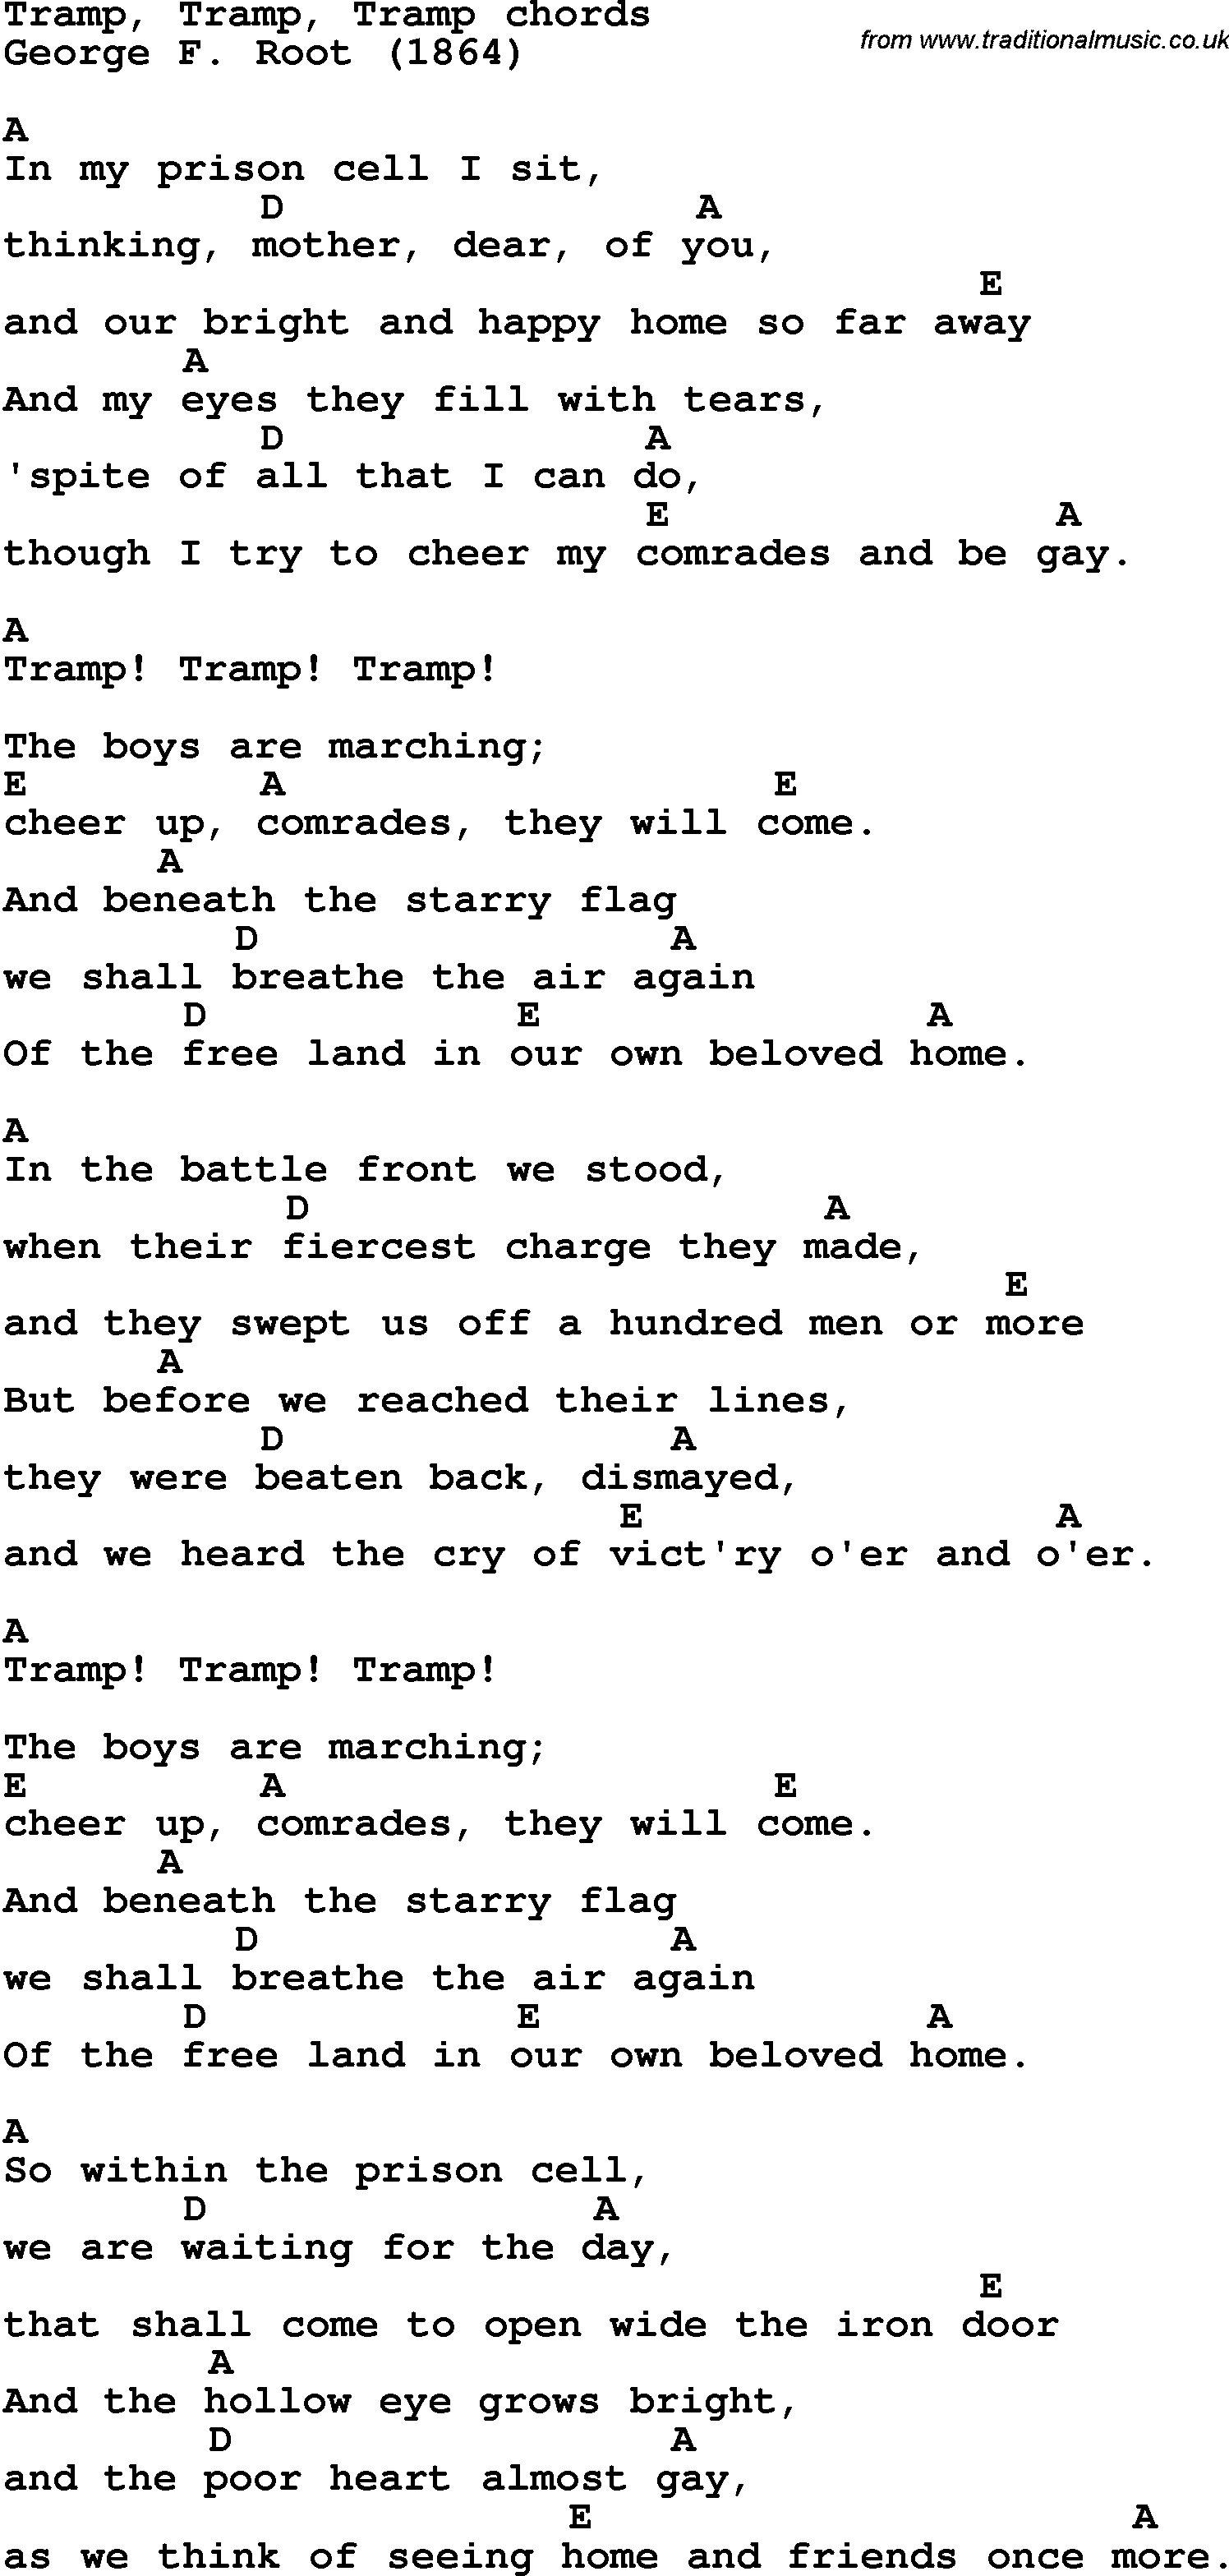 Song Lyrics with guitar chords for Tramp, Tramp, Tramp